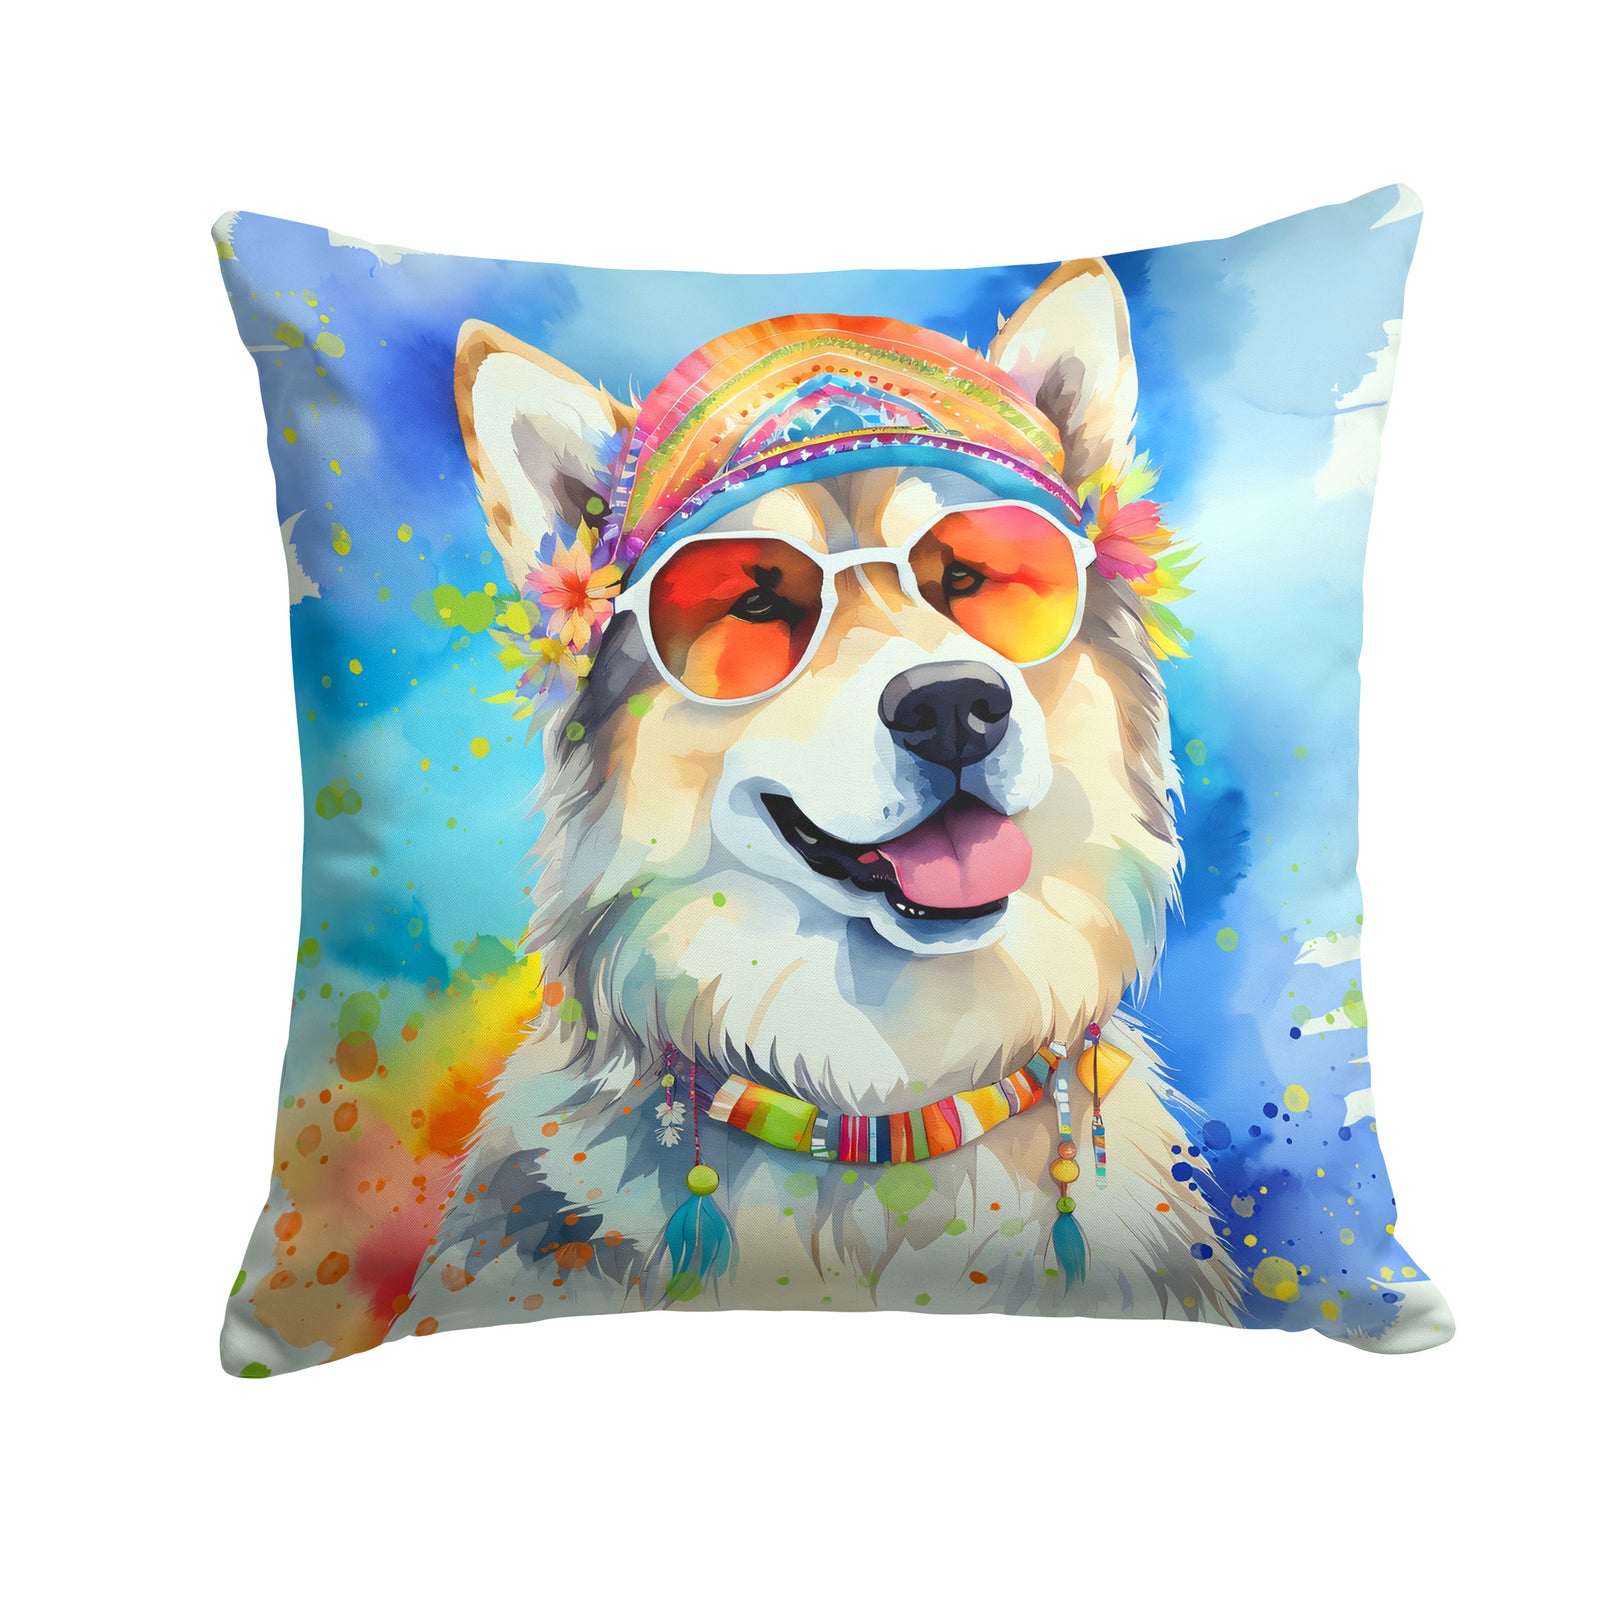 Buy this Alaskan Malamute Hippie Dawg Fabric Decorative Pillow